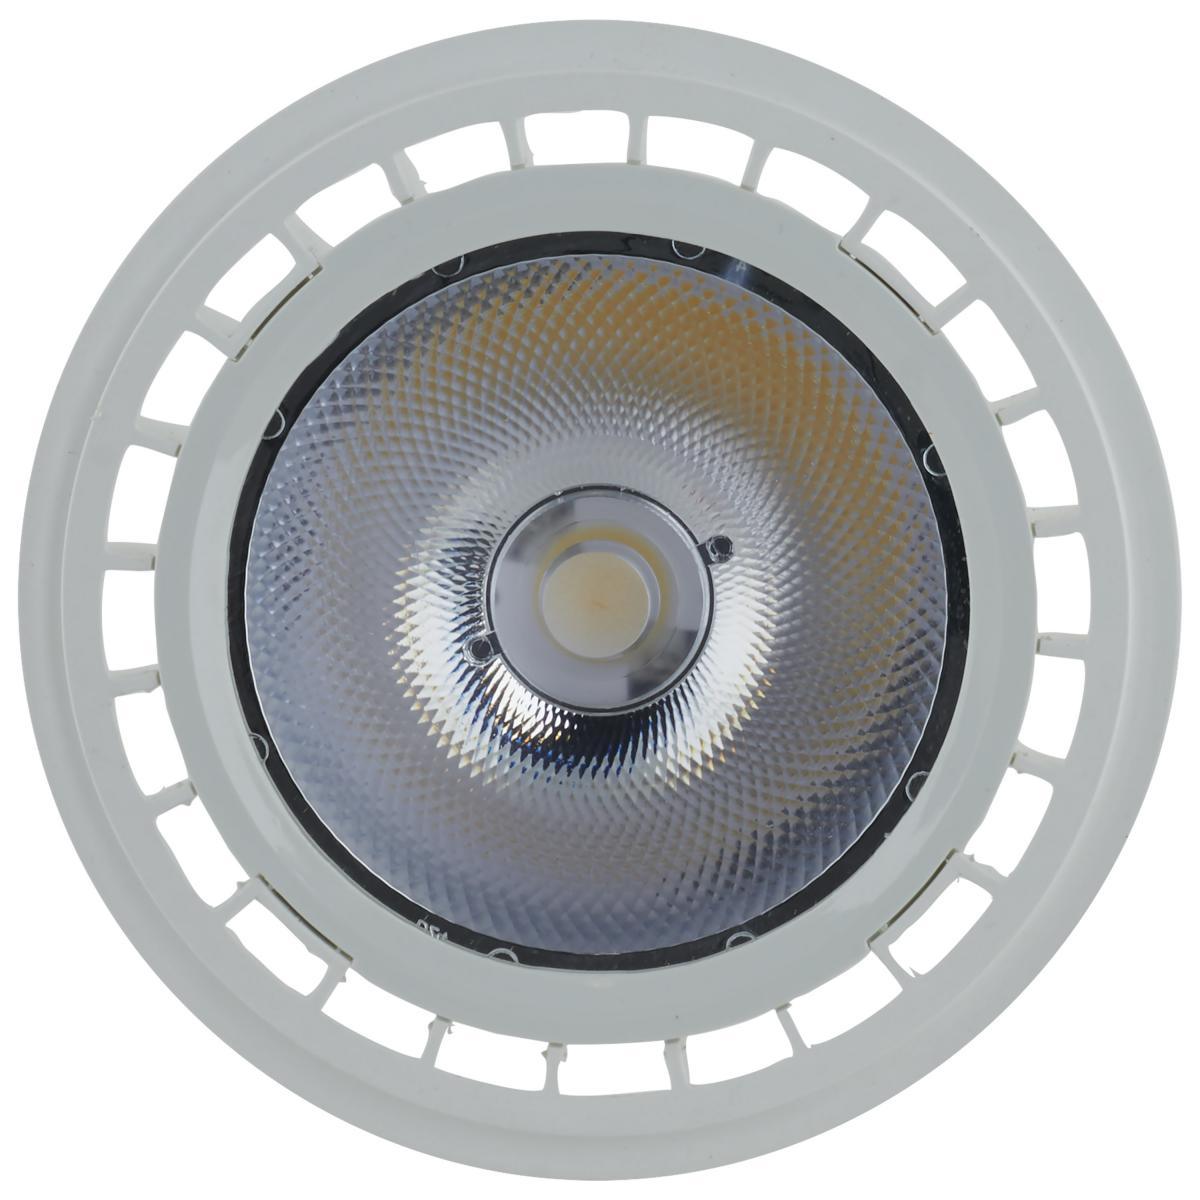 LED AR111 Reflector bulb, 12 watt, 850 Lumens, 3000K, G53 Base, 12 Deg. Spot